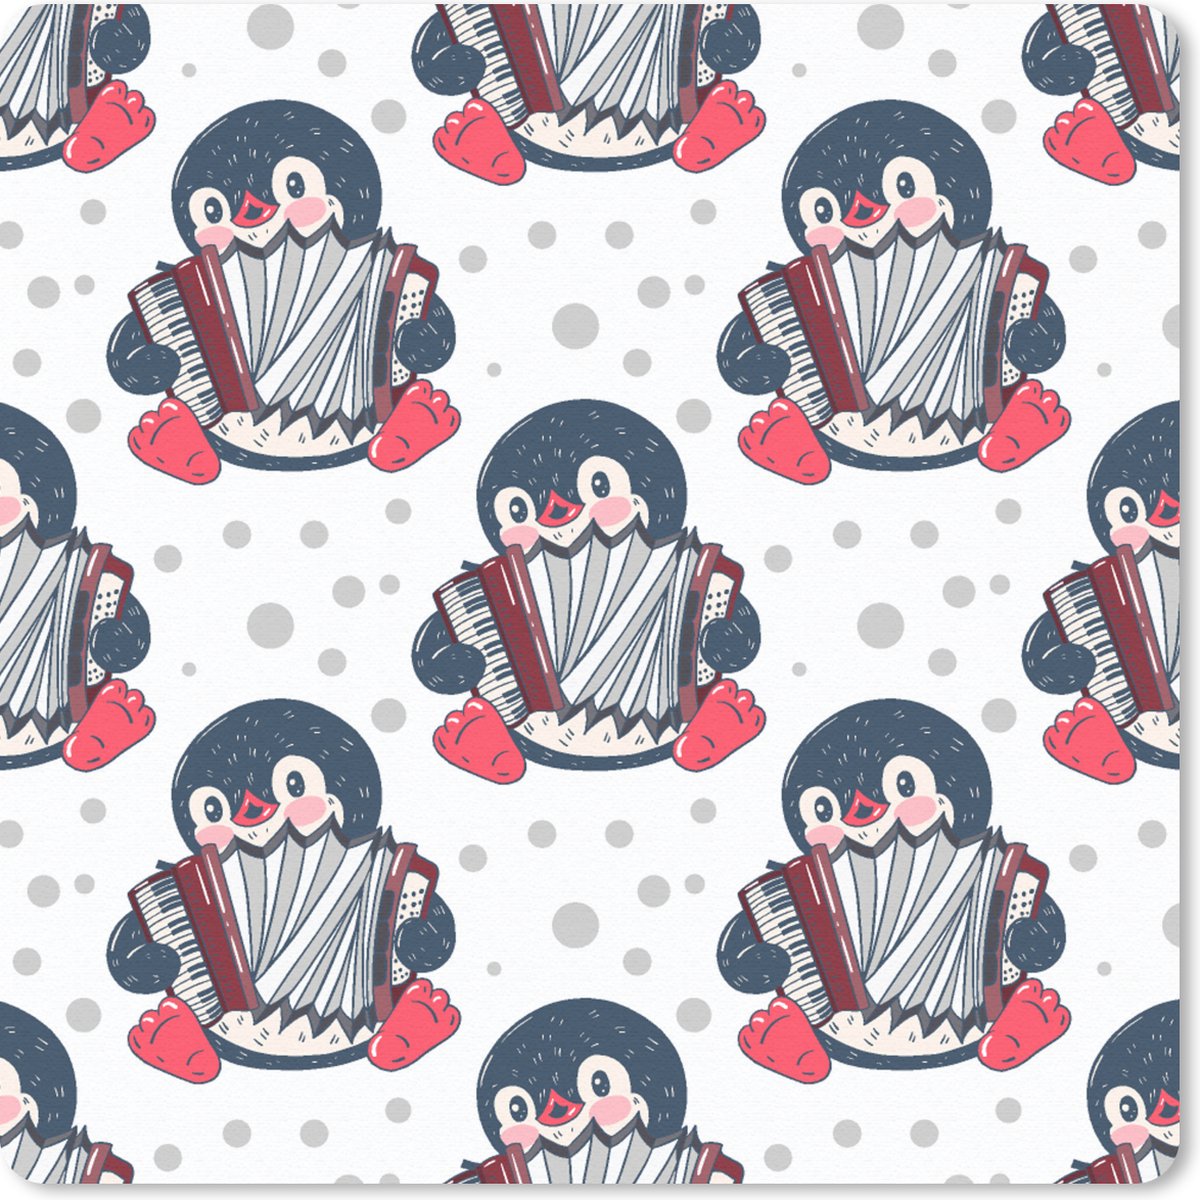 Muismat - Mousepad - Accordeon - Pinguïn - Patronen - 30x30 cm - Muismatten